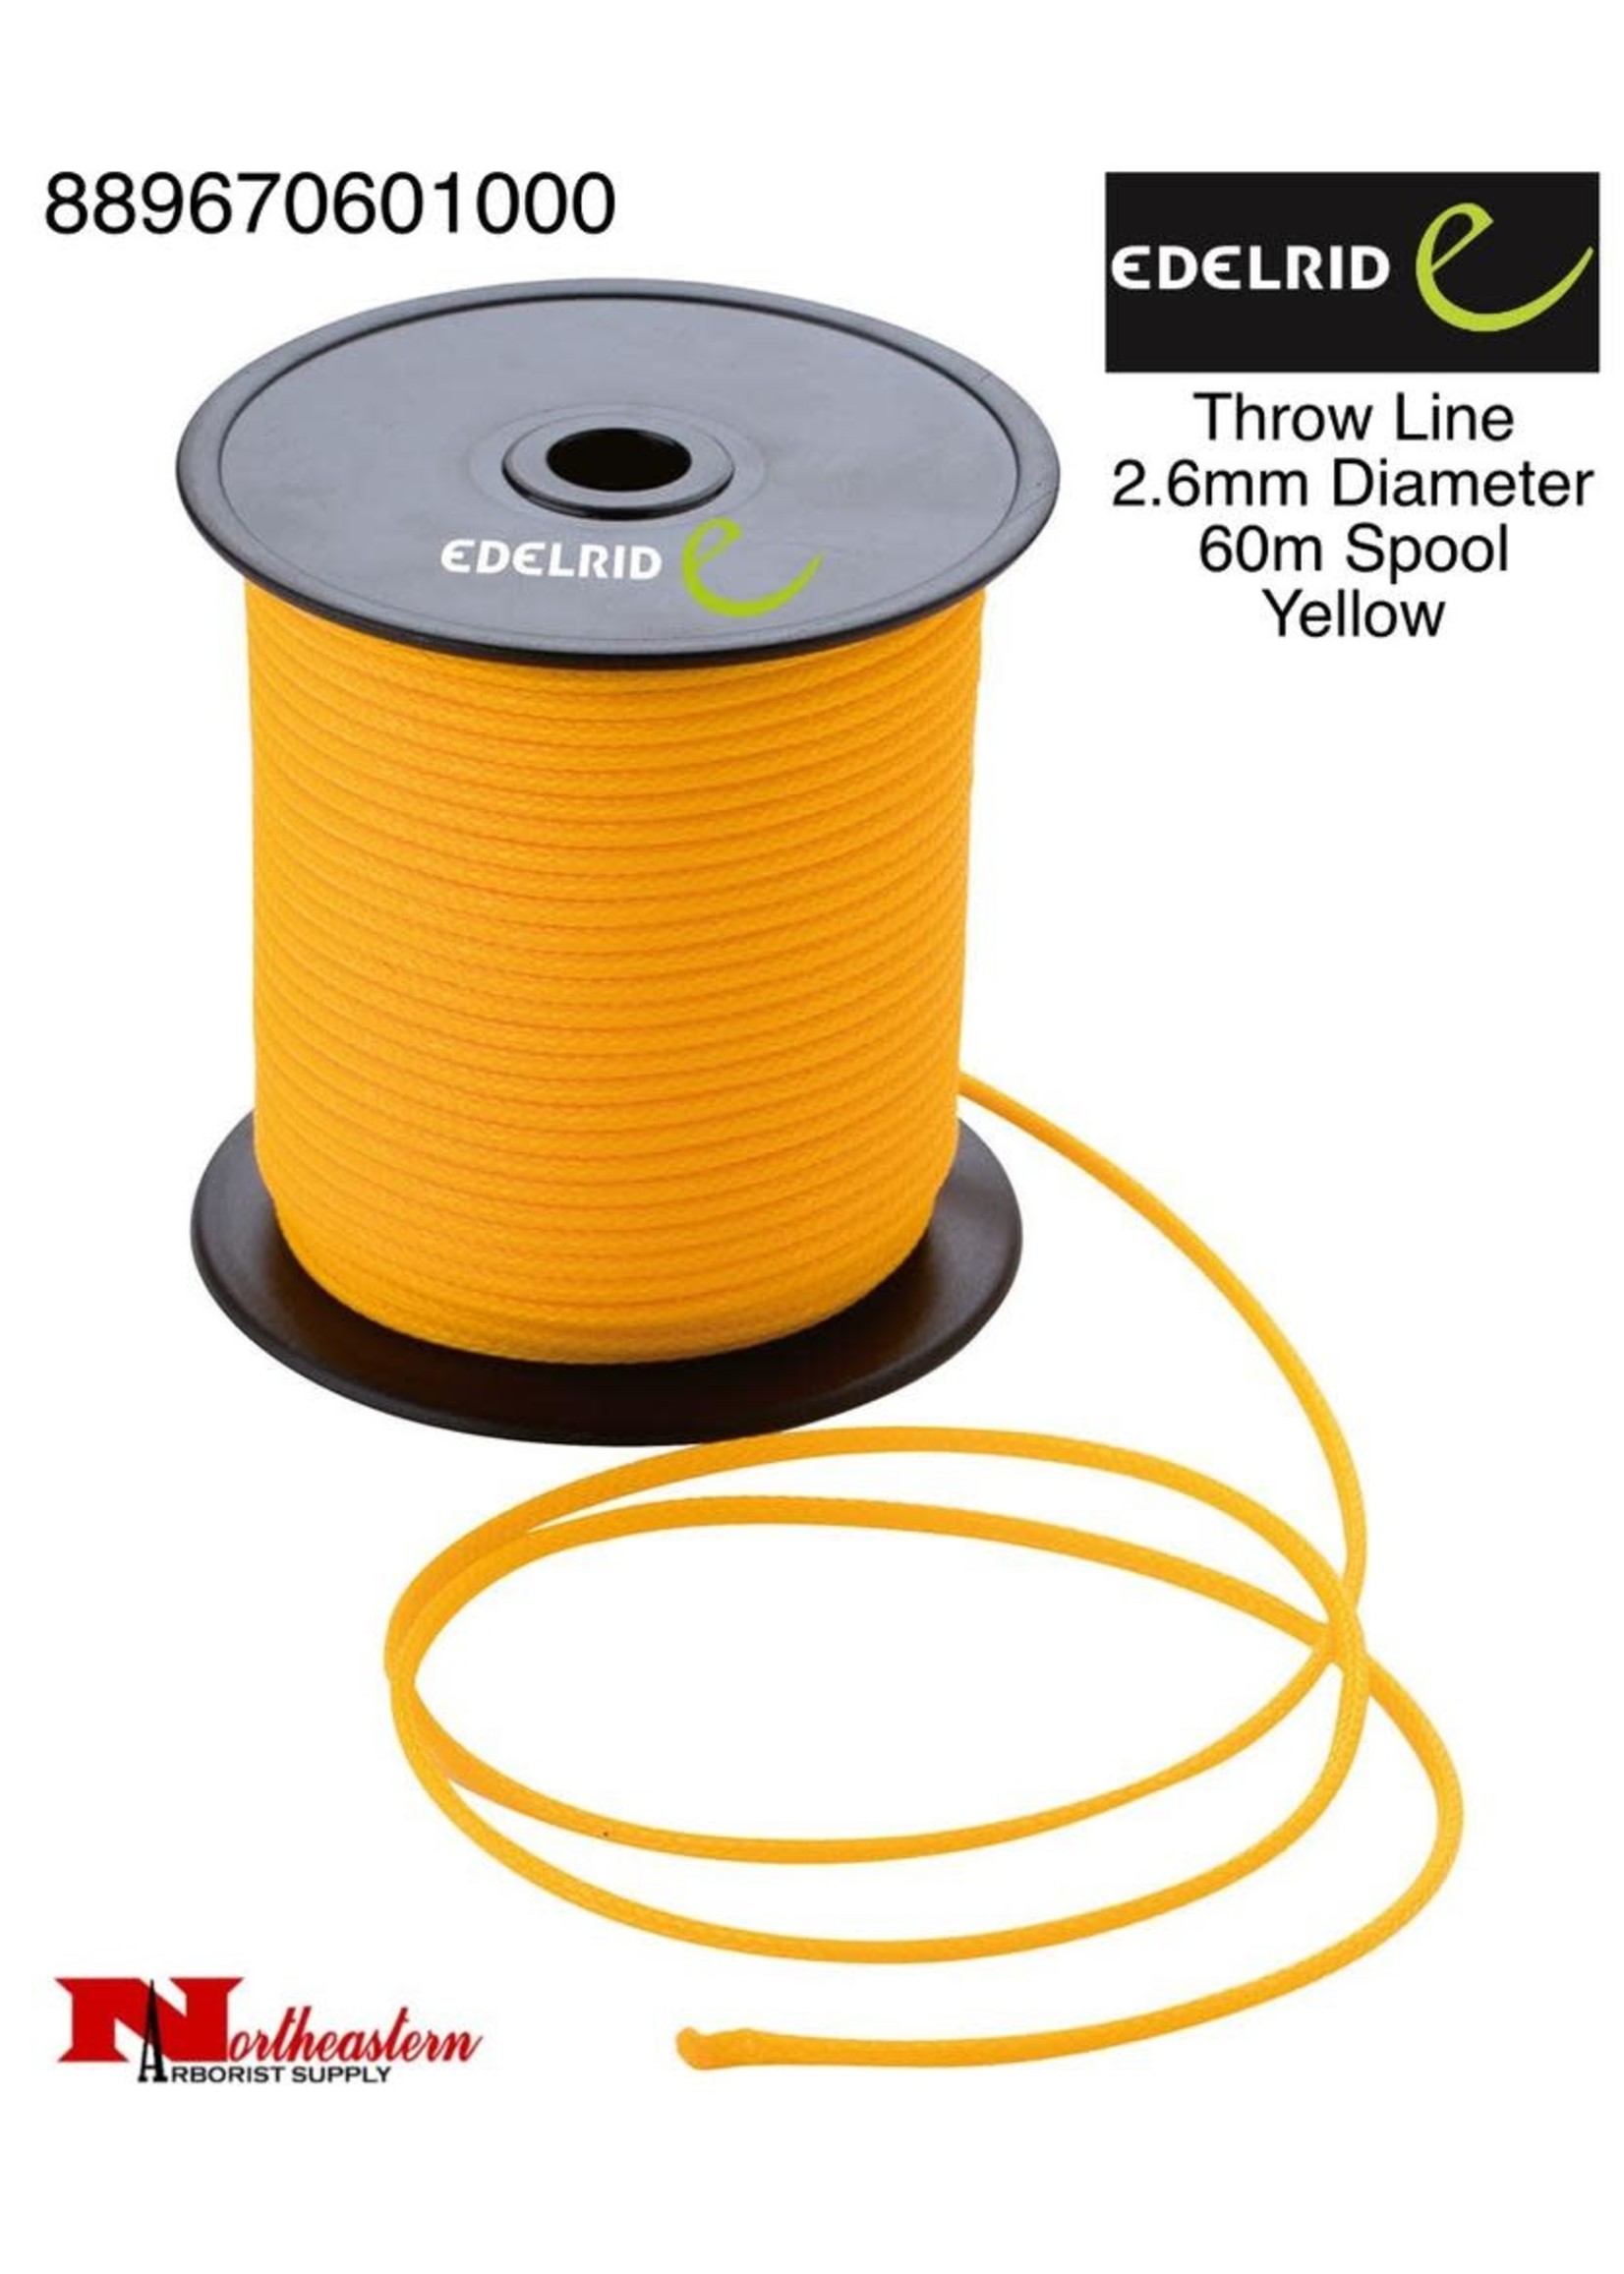 EDELRID Throw Line 2.6mm Diameter, 60M Spool, Yellow